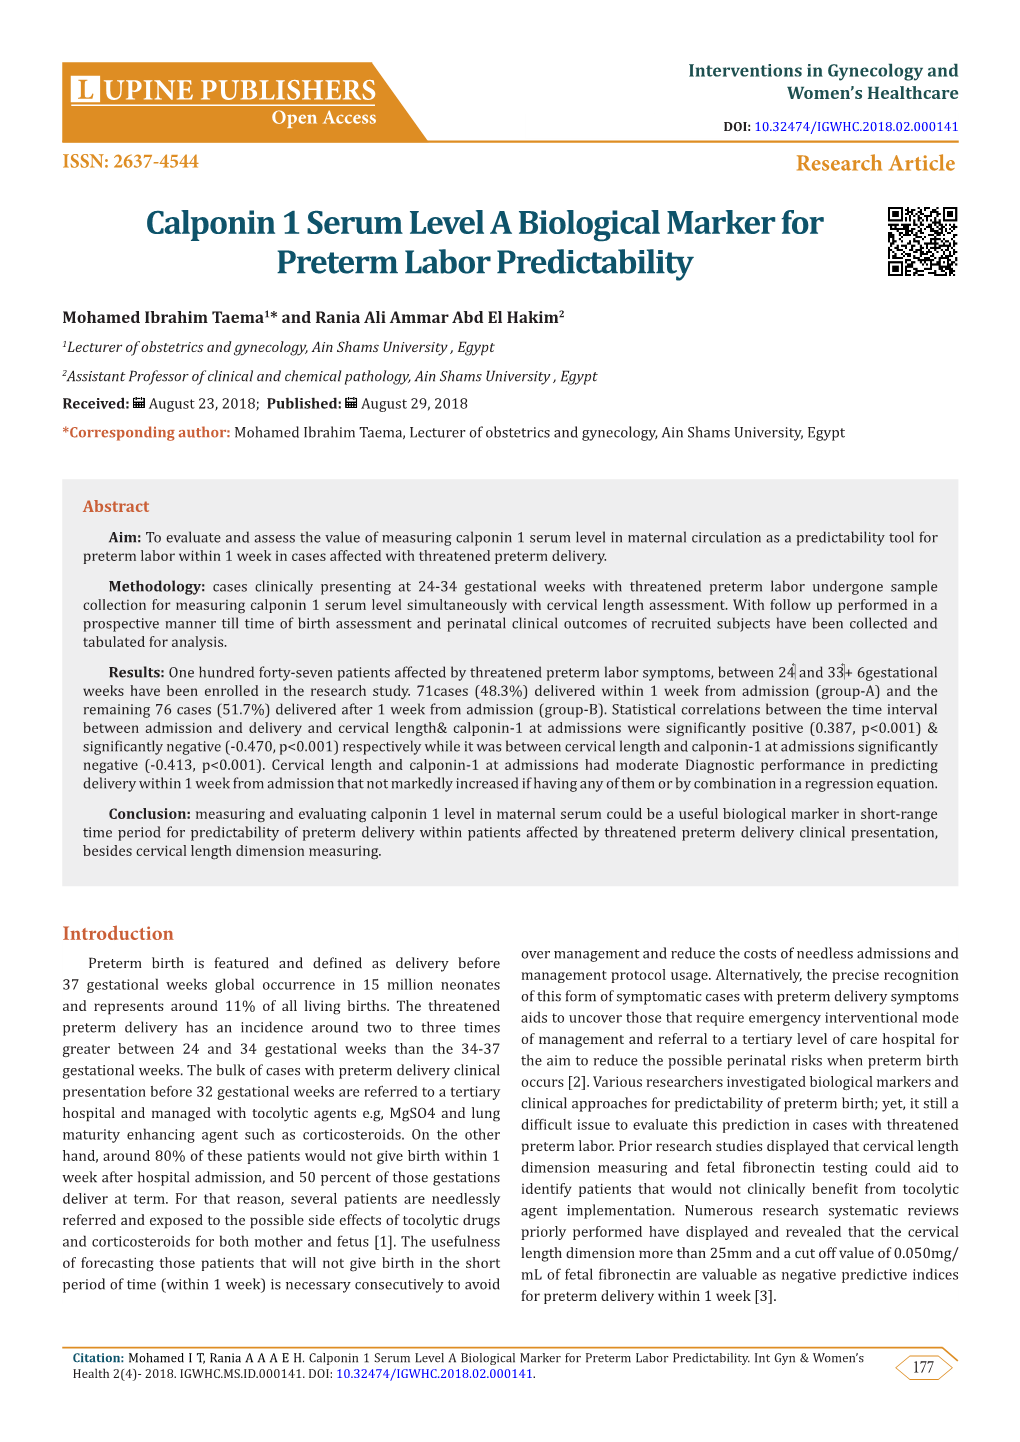 Calponin 1 Serum Level a Biological Marker for Preterm Labor Predictability